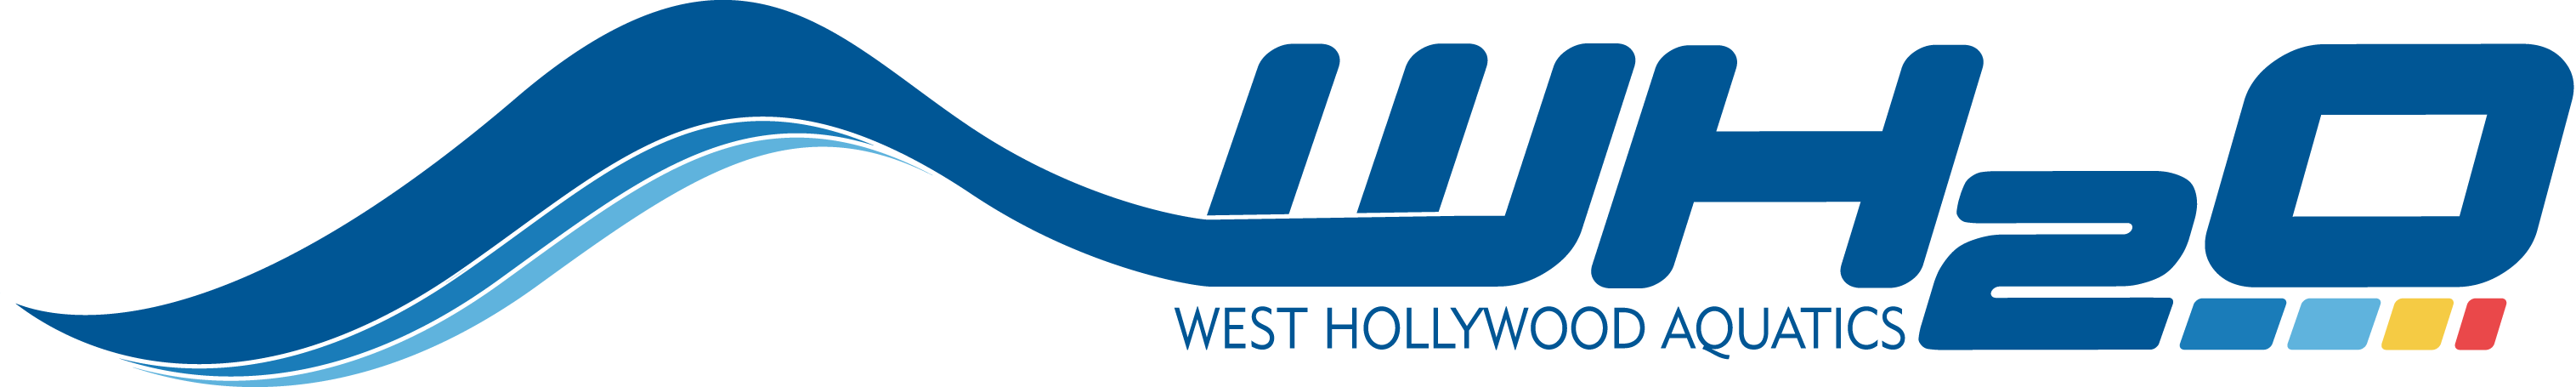 West Hollywood Aquatics